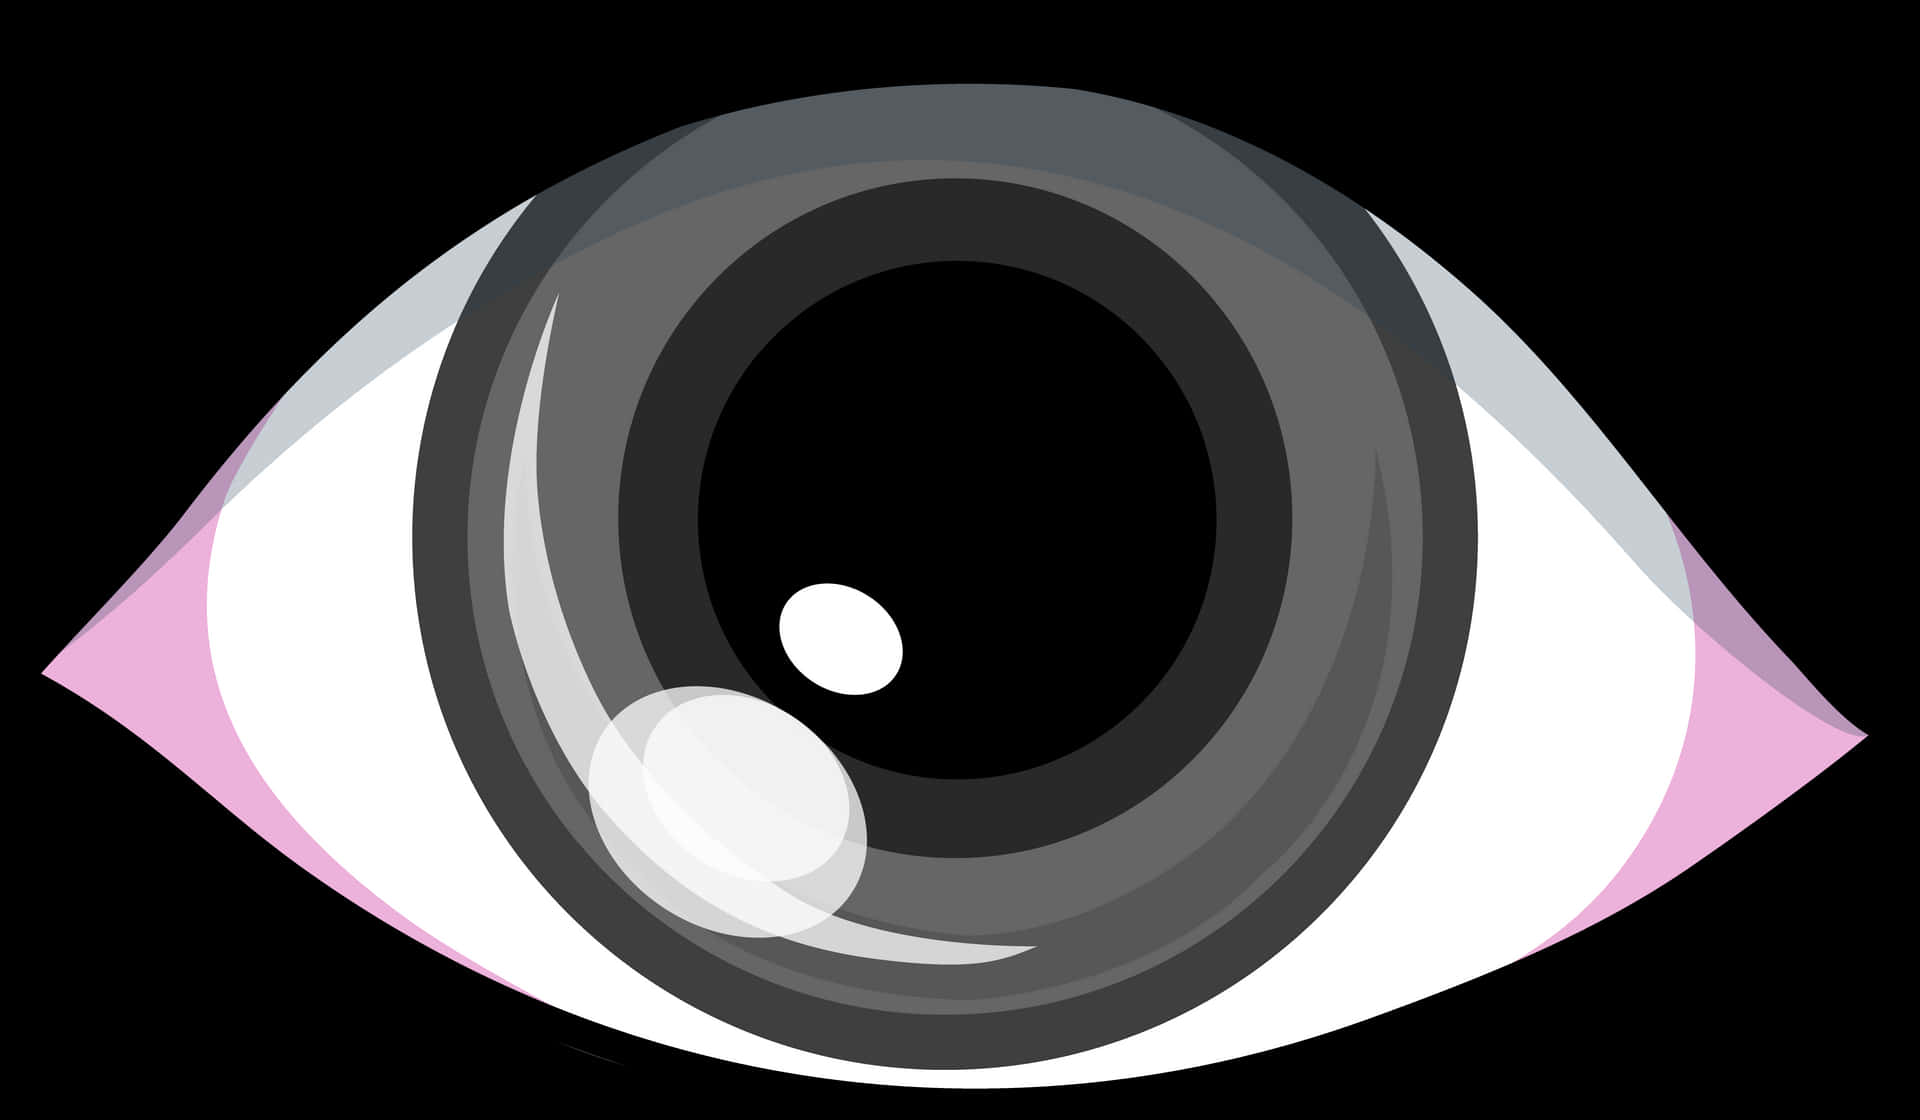 Abstract Eye Illustration.jpg PNG image